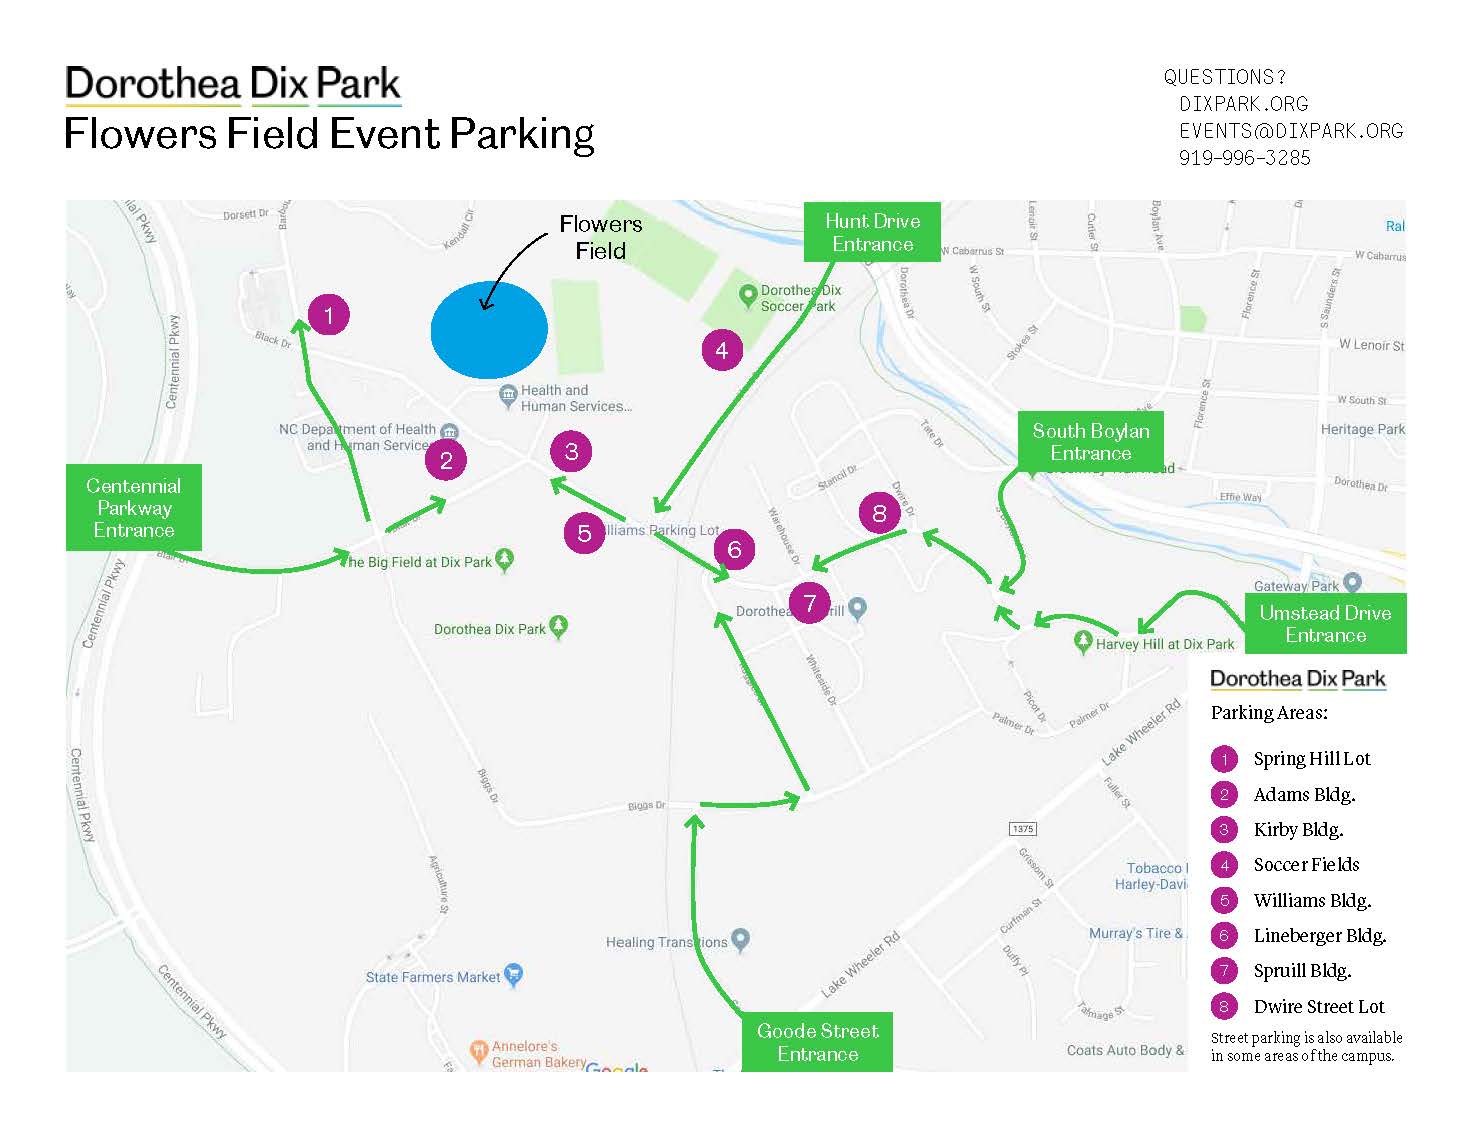 Dix Park Event Parking Map for Flowers Field